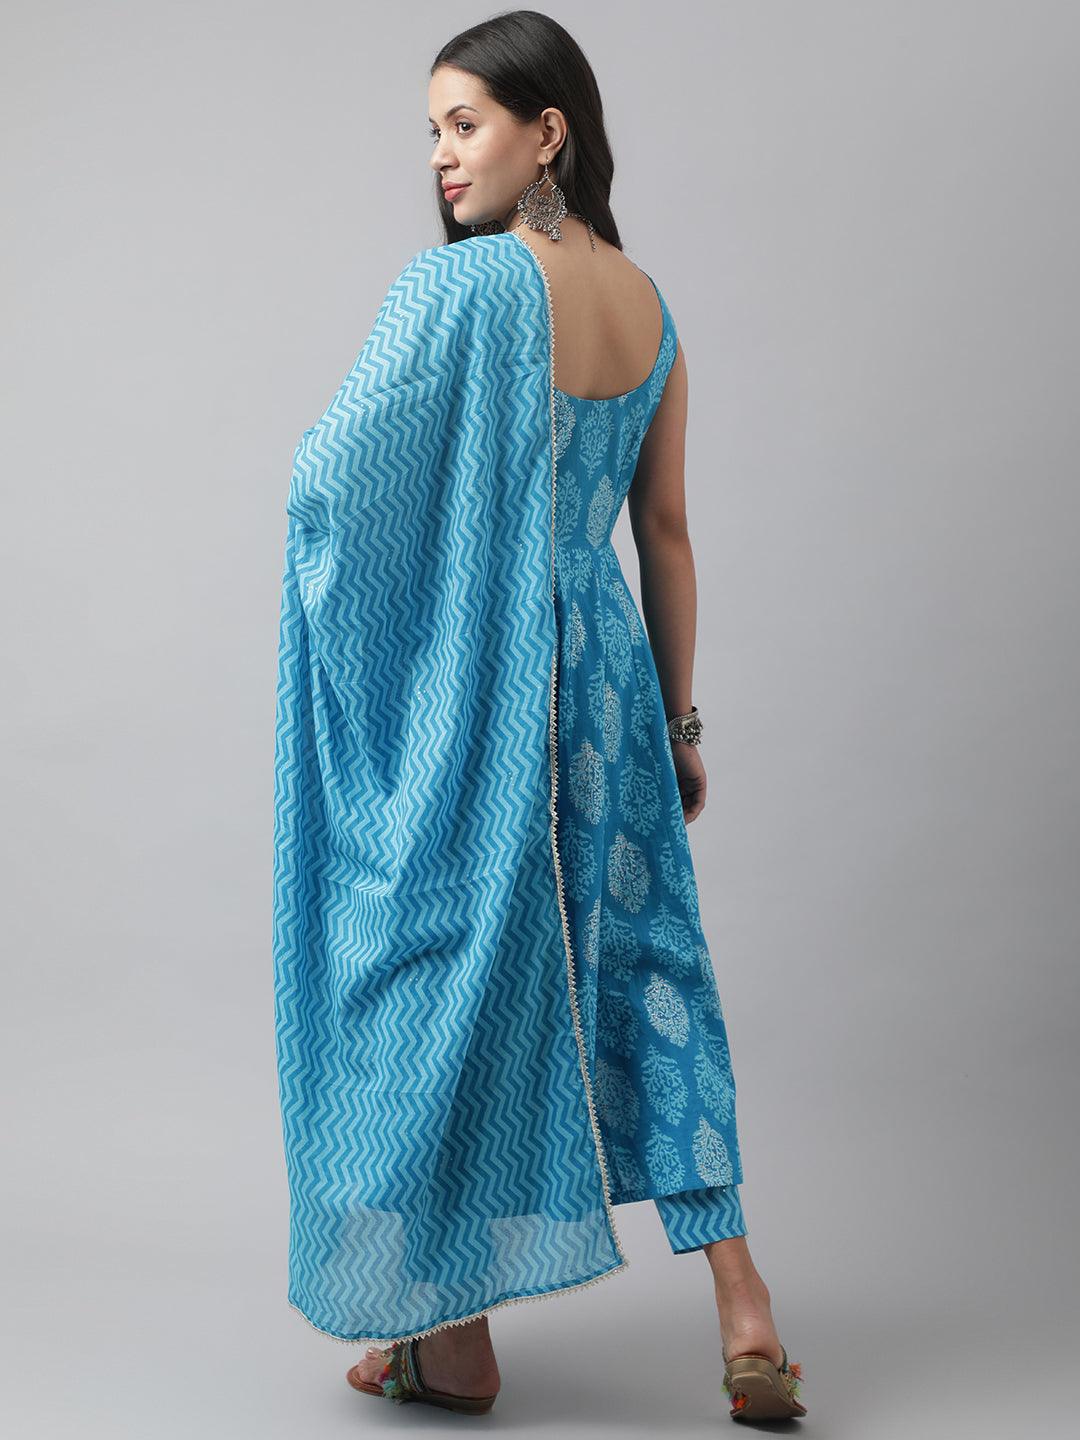 Divena Turquoise Blue Floral Cotton Anarkali Kurta Pant Set with Dupatta - divena world